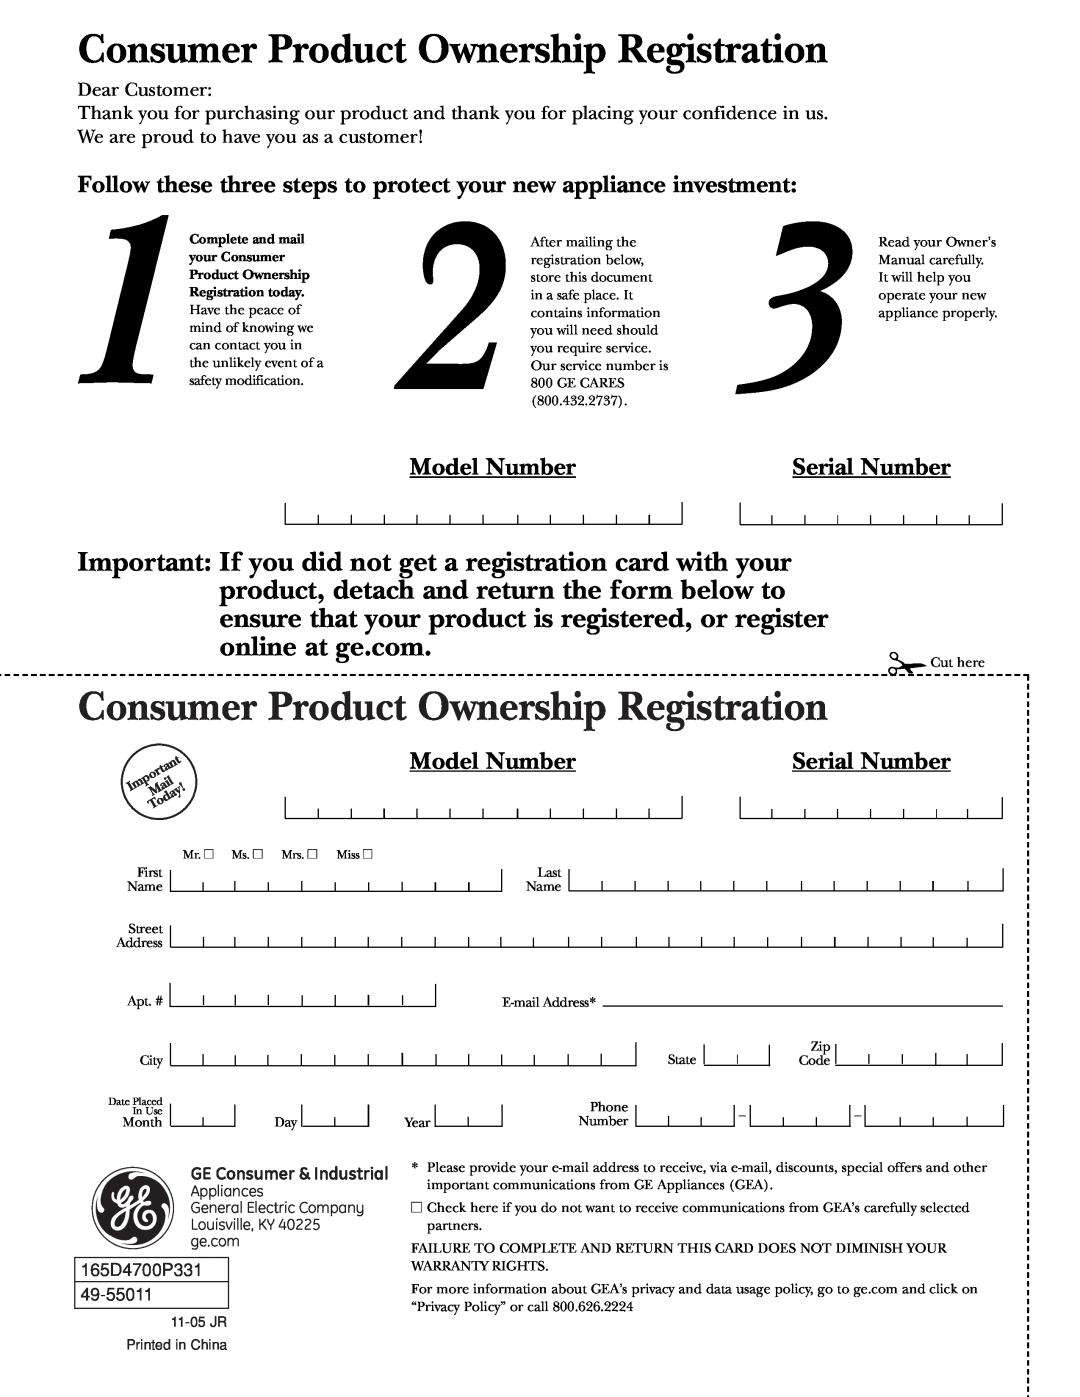 GE Monogram ZCGP150 Consumer Product Ownership Registration, Model Number, Serial Number, Dear Customer, 165D4700P331 